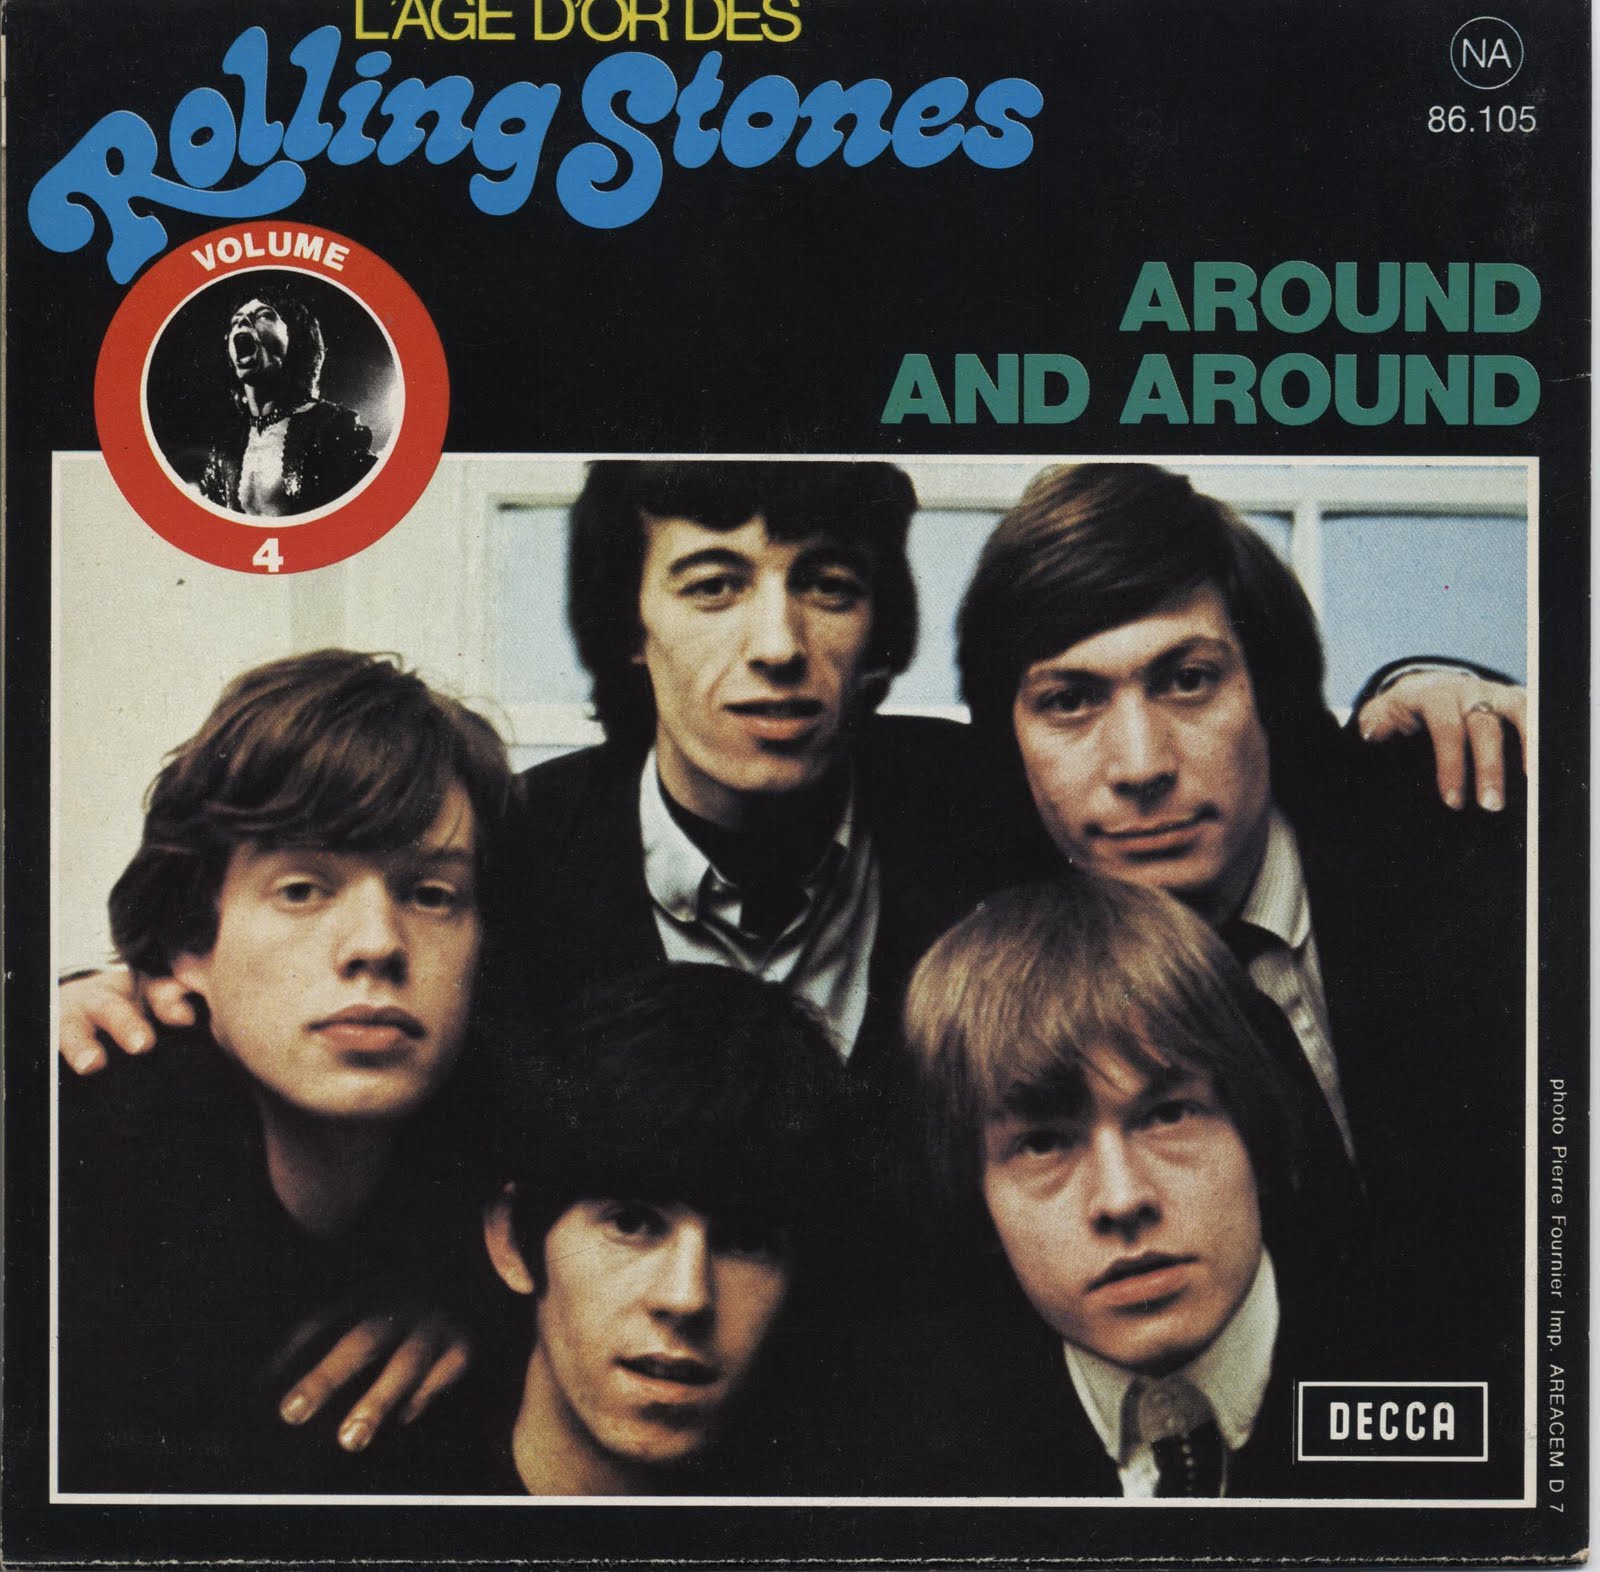 Rolling now. Роллинг стоунз 1975. The Rolling Stones Now Now. Rolling Stones its all over Now. The Rolling Stones around and around.